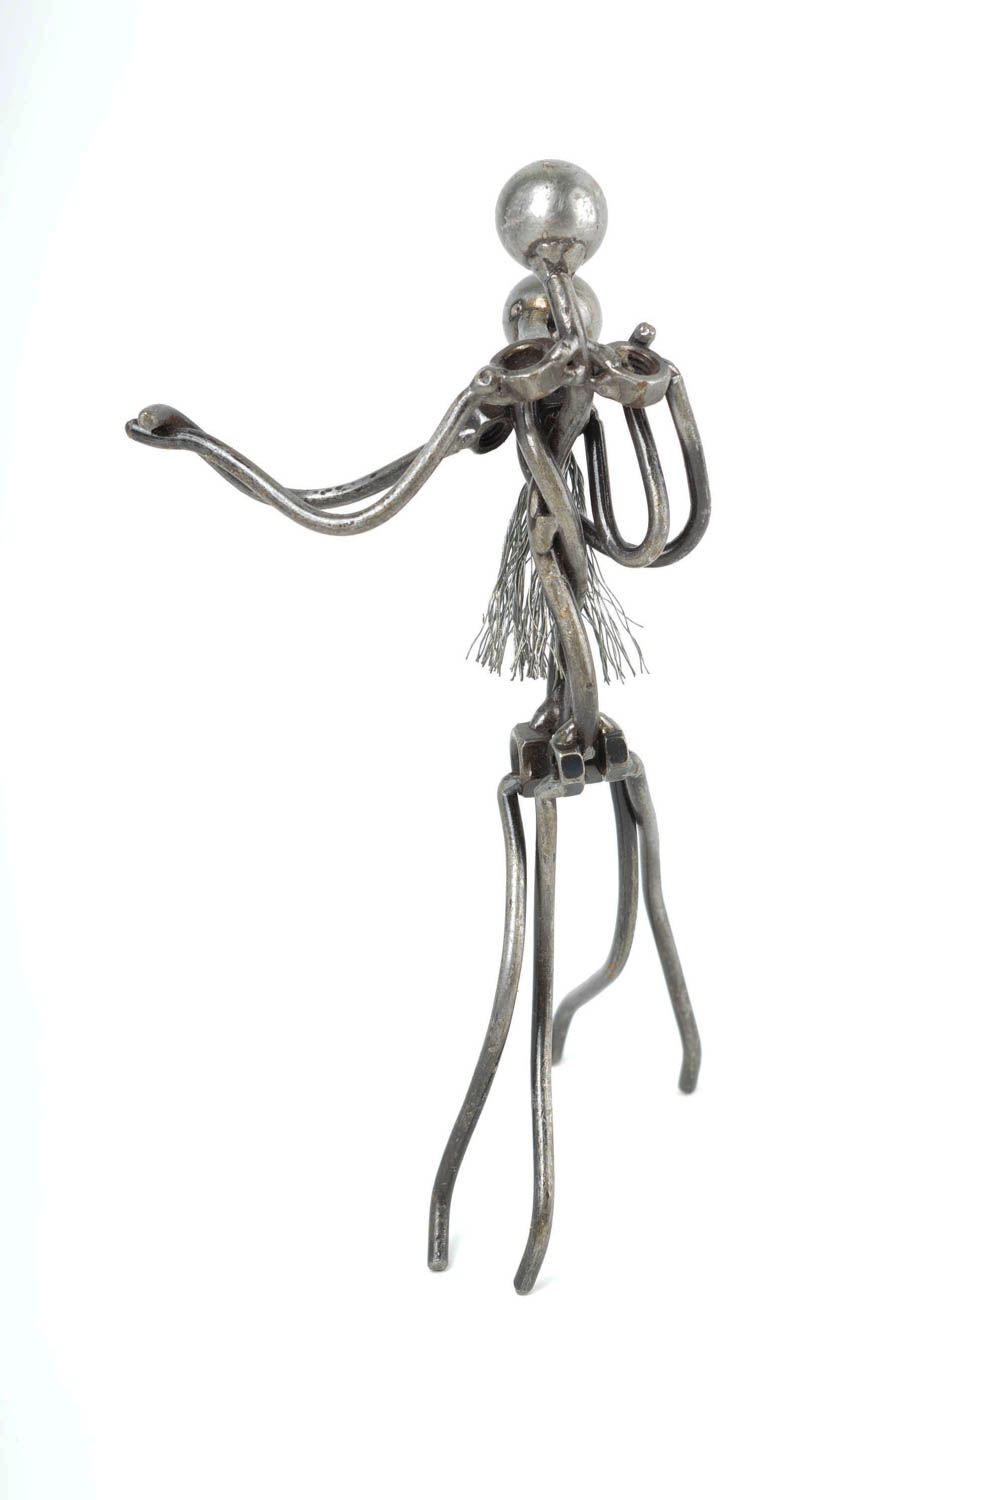 Unusual handmade figurine romantic metal figurine gift ideas decorative use only photo 3